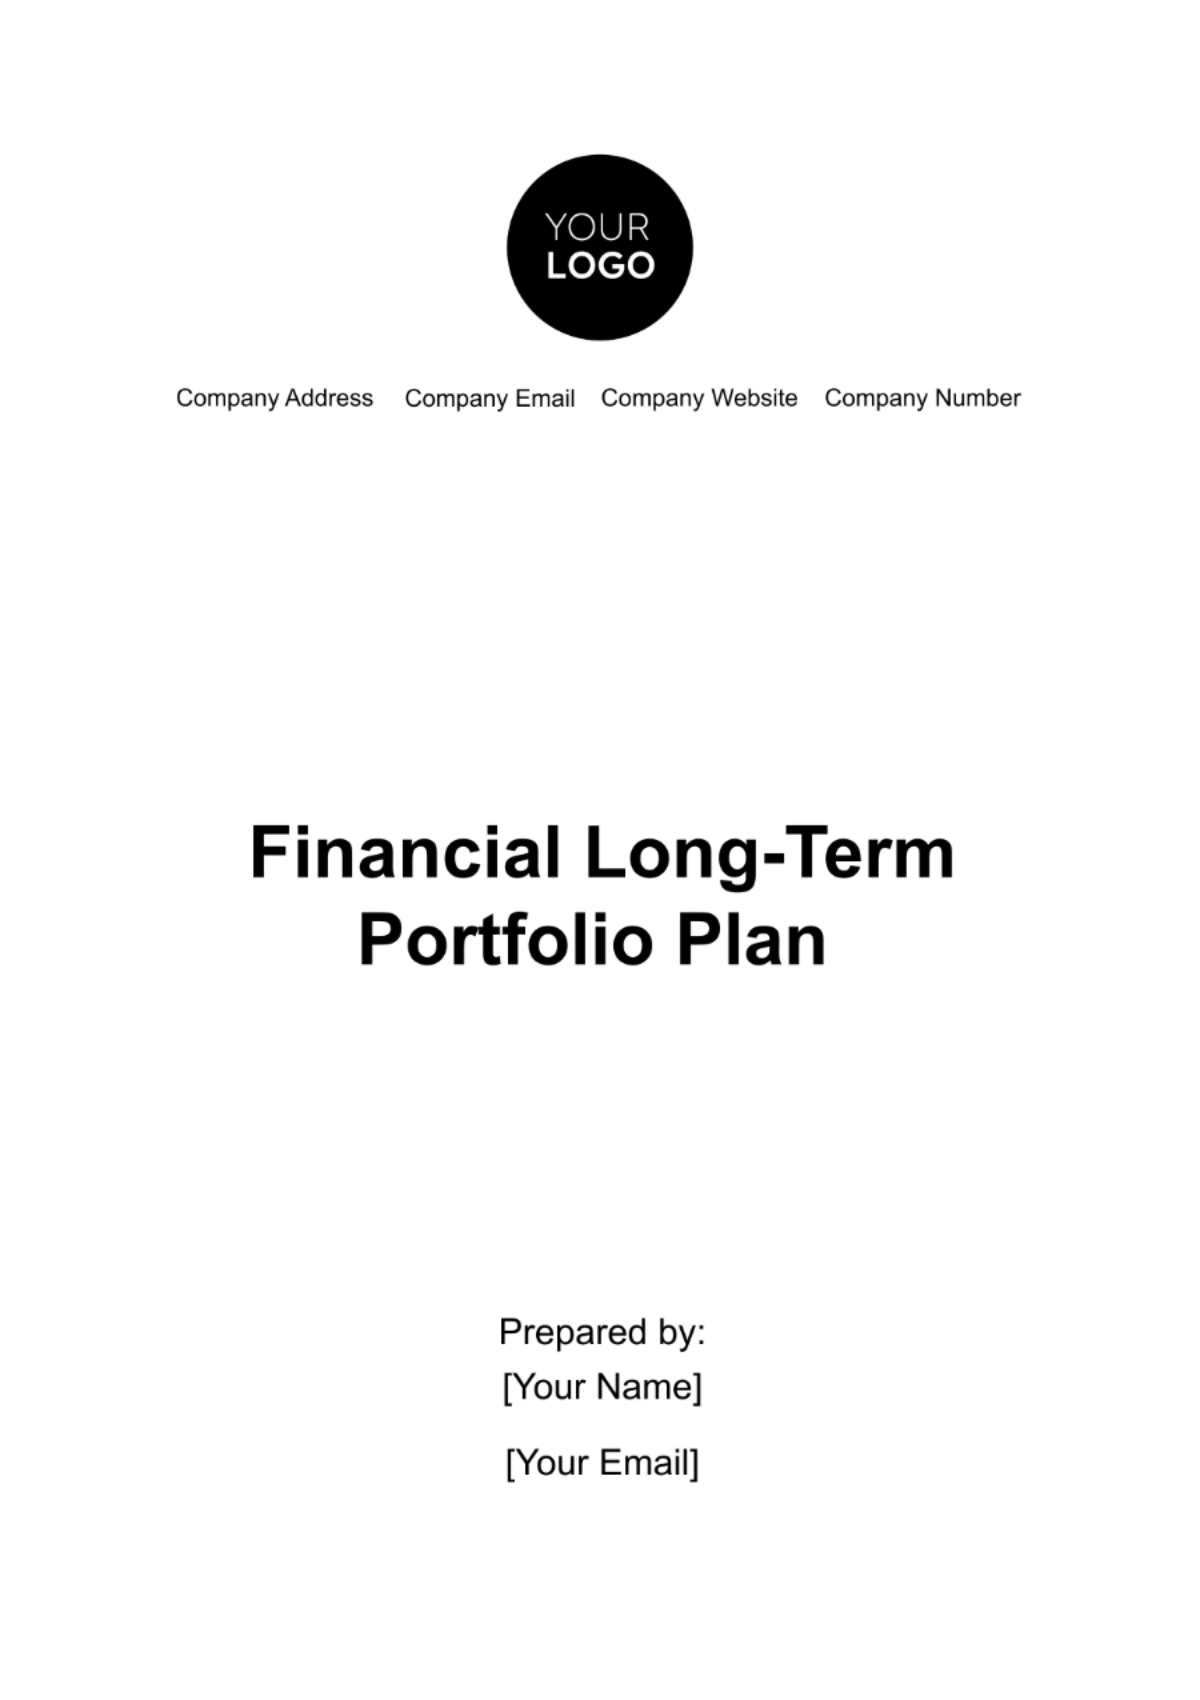 Financial Long-Term Portfolio Plan Template